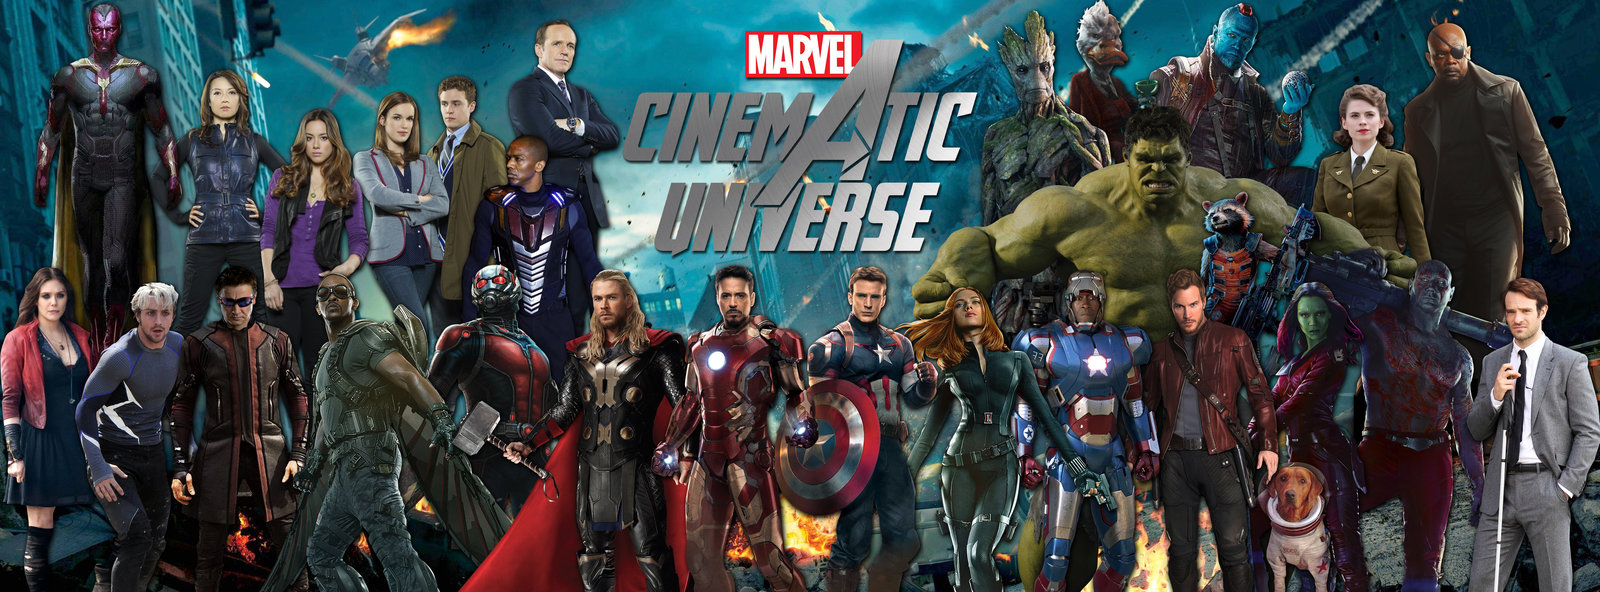 MCU-Marvel-Cinematic-Universe-3.jpg